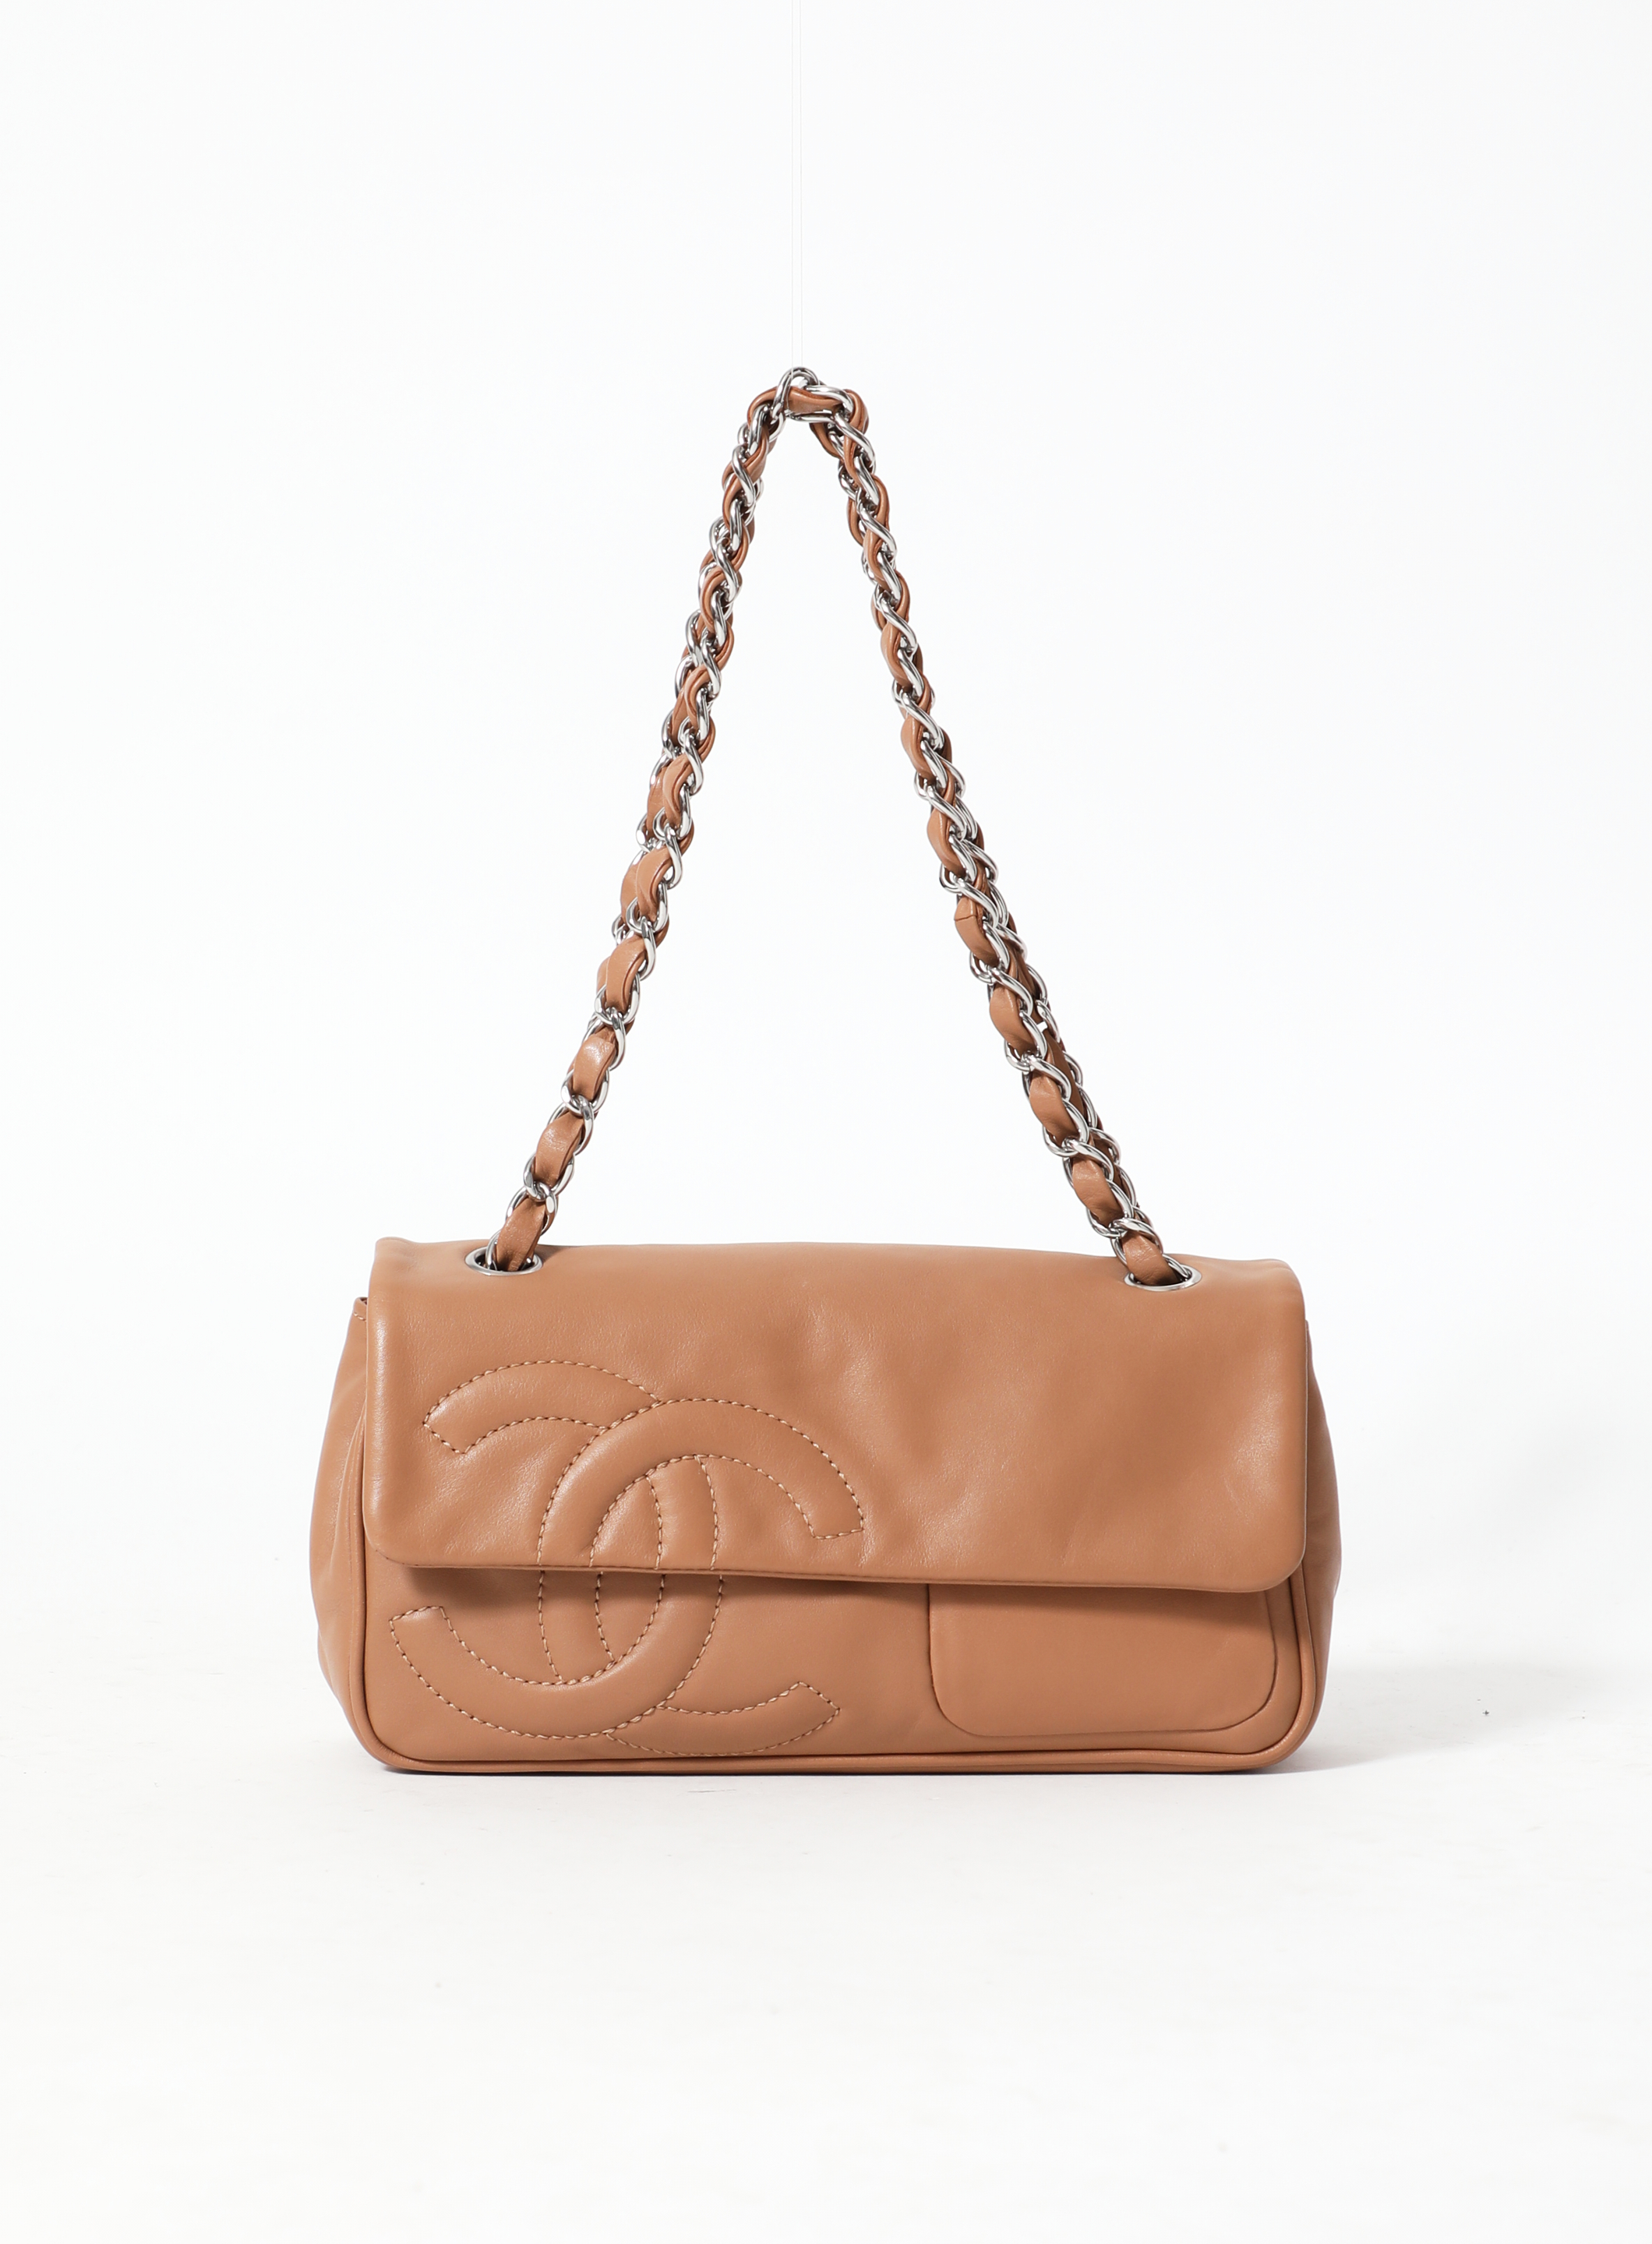 CHANEL, Bags, Chanel Luxe Ligne Metallic Silver Flap Bag